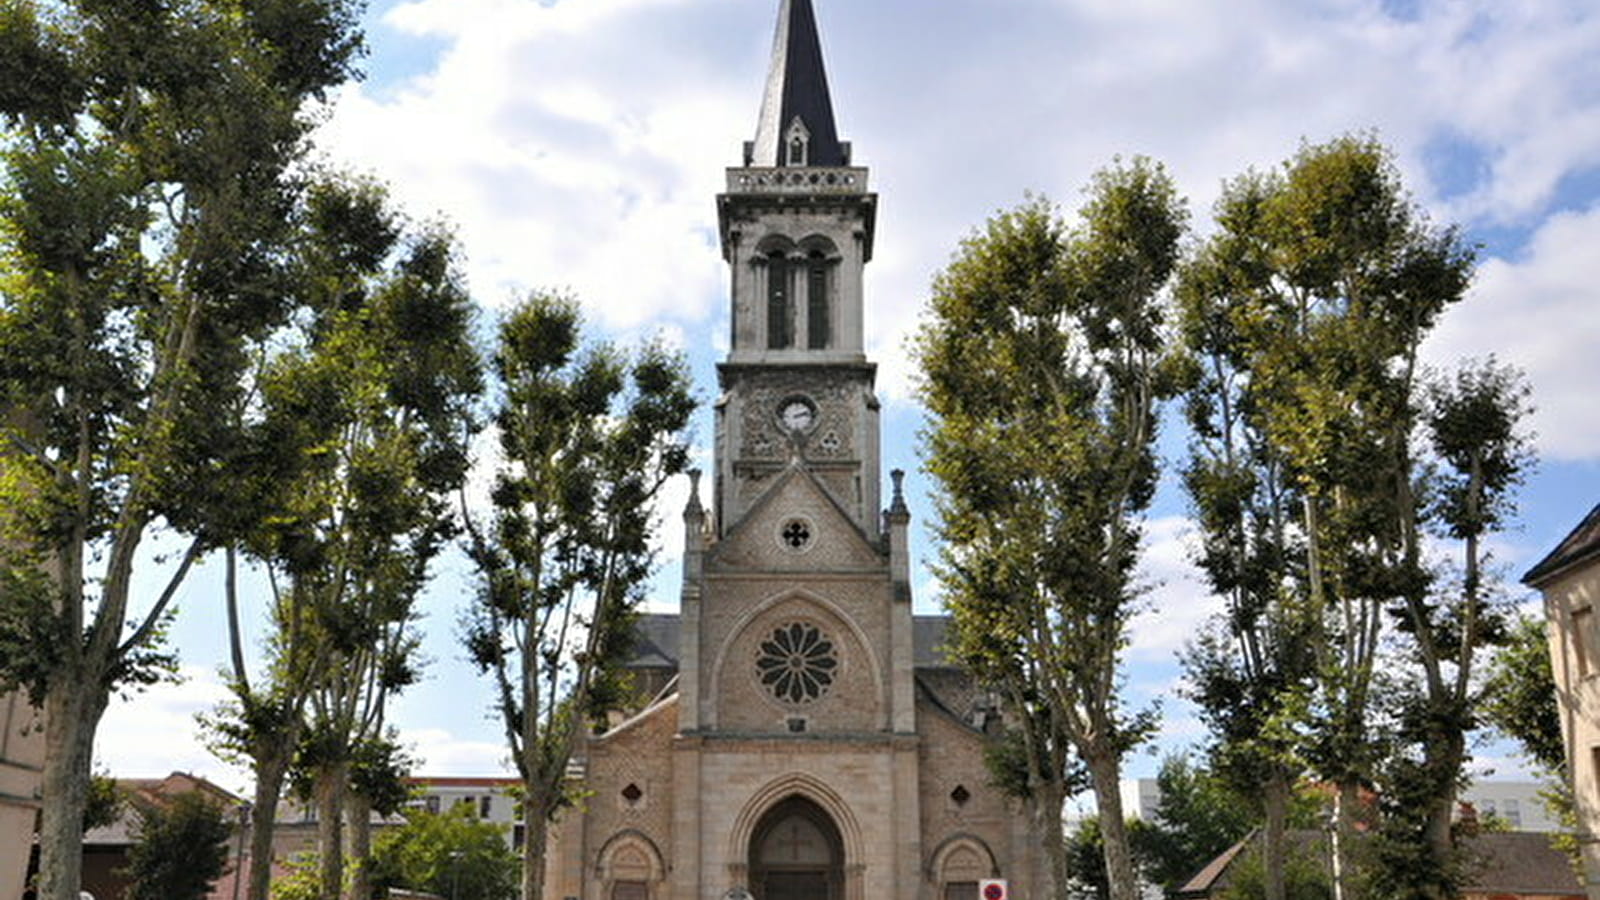 Eglise Saint-Cosme